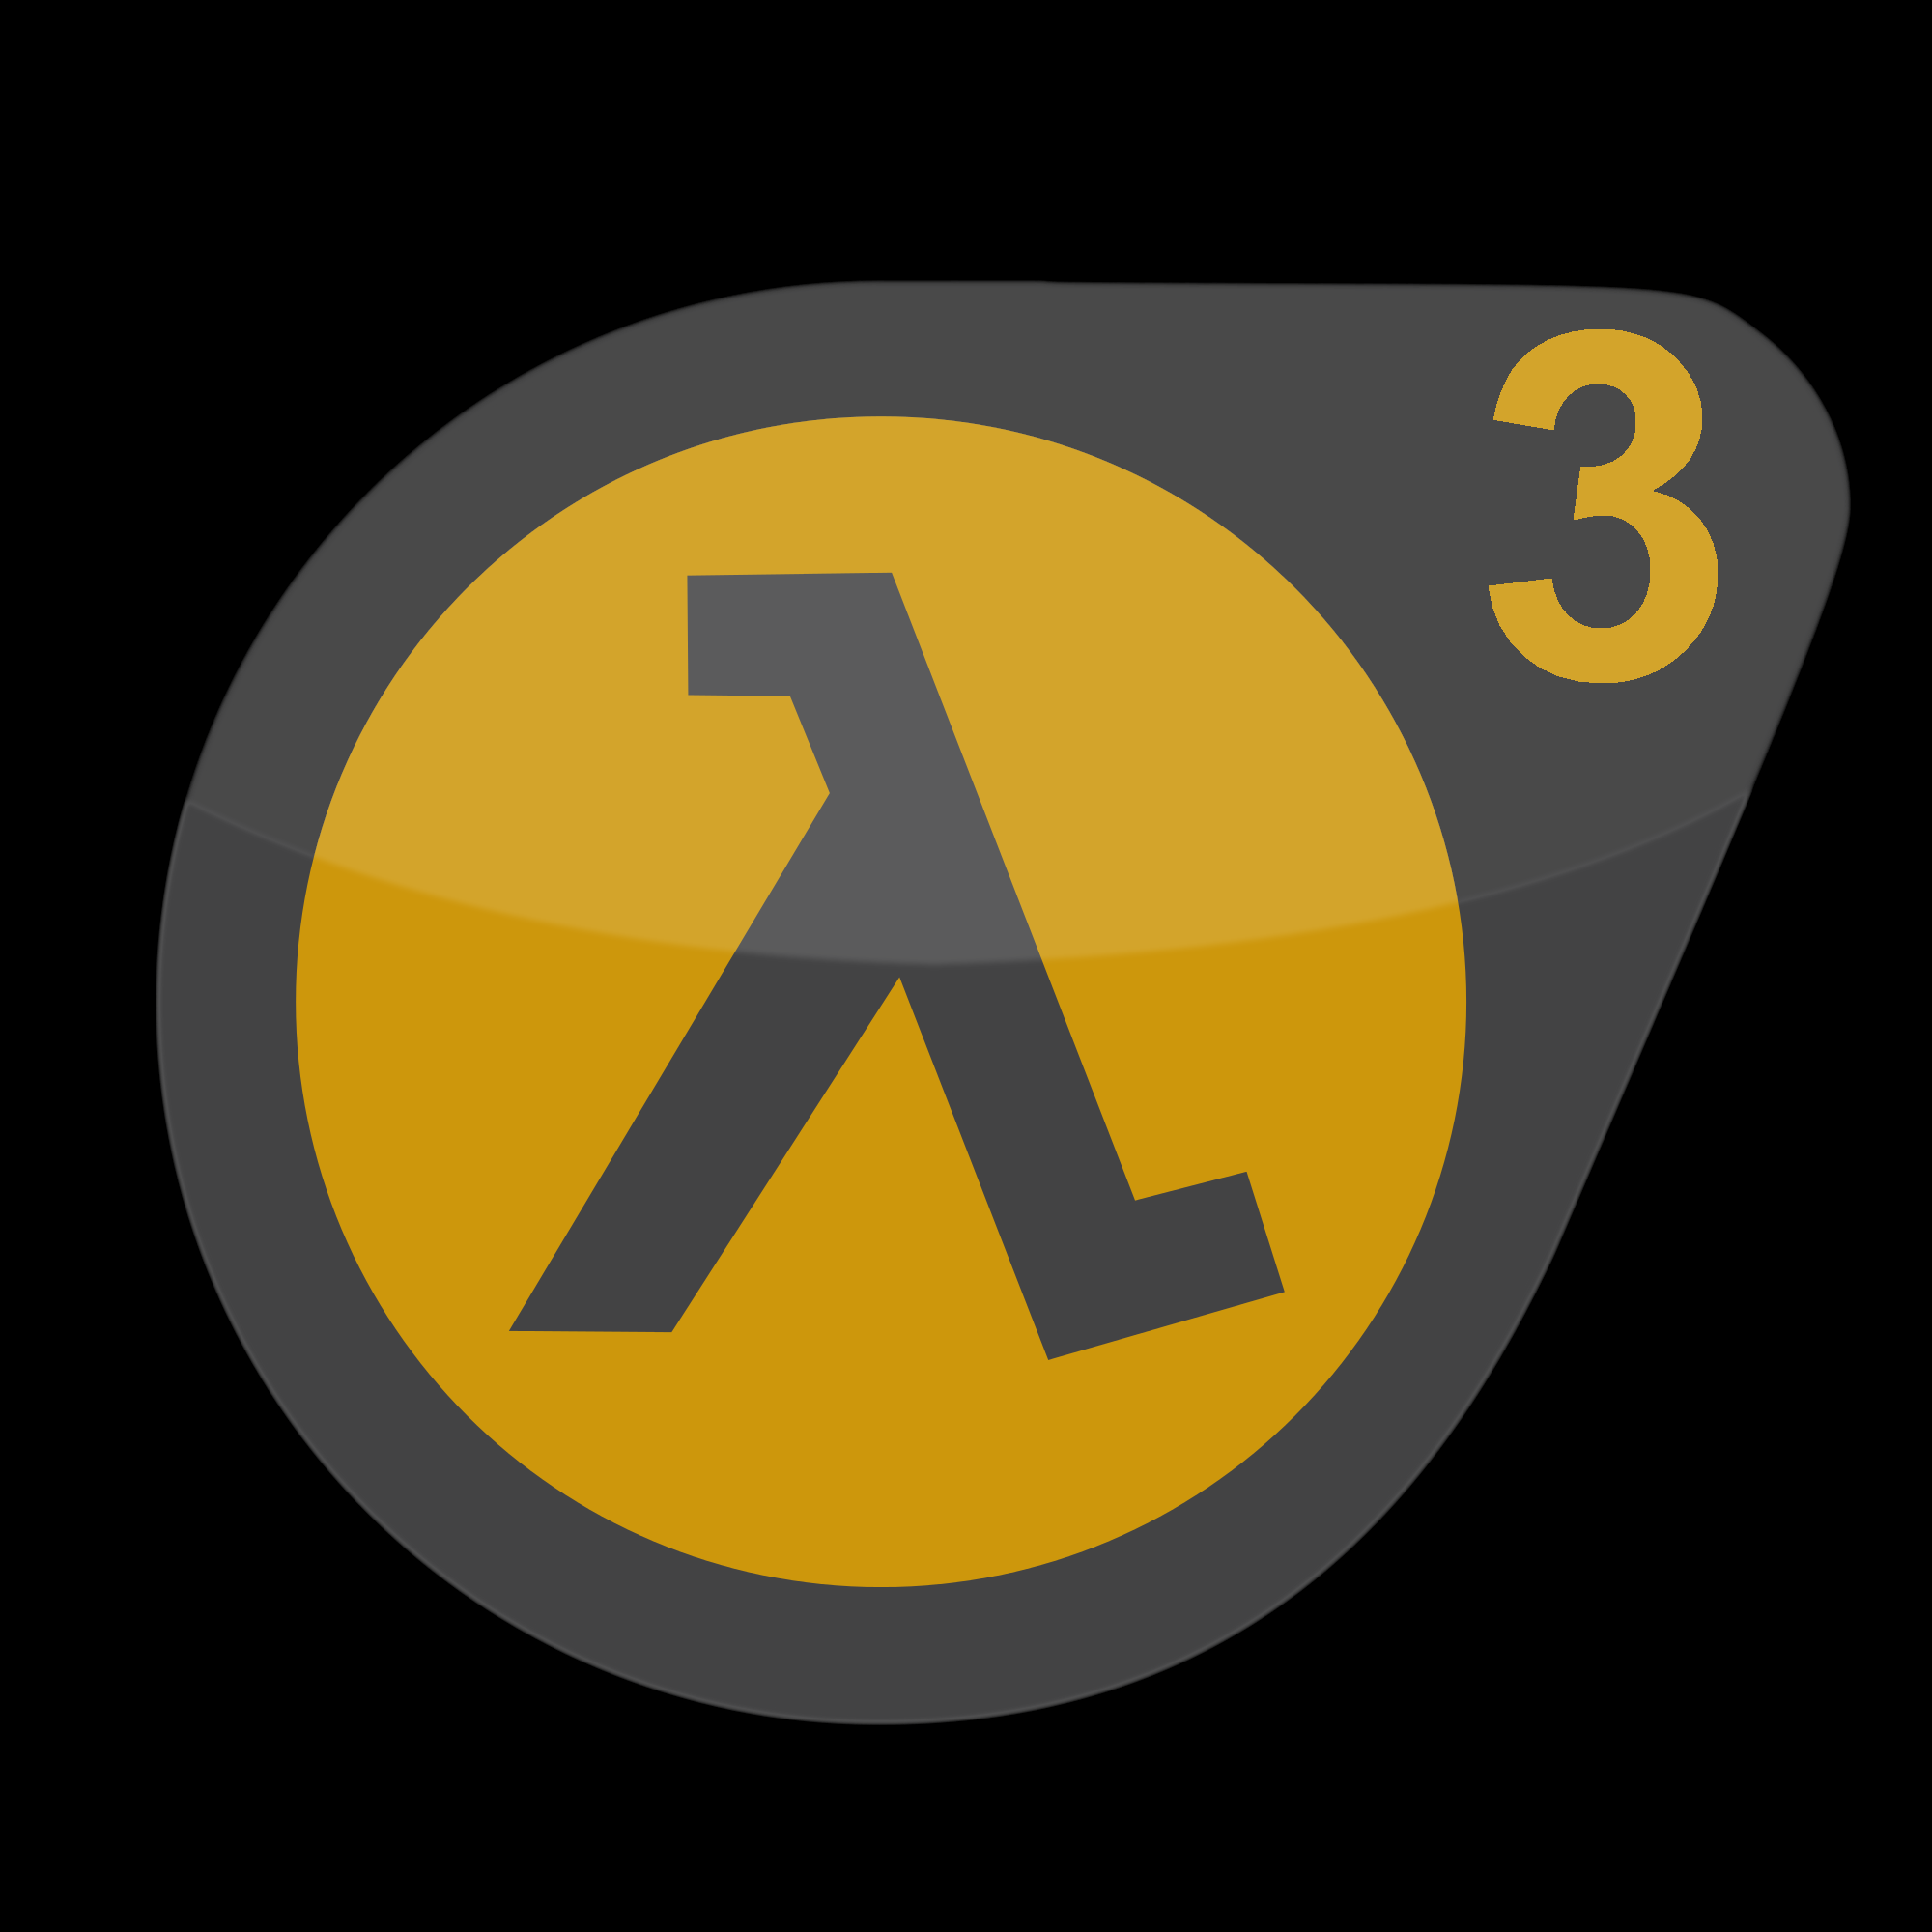 Half Life 3 icon. Half Life 2 значок. Half Life 3 logo. Half Life 3 ярлык.